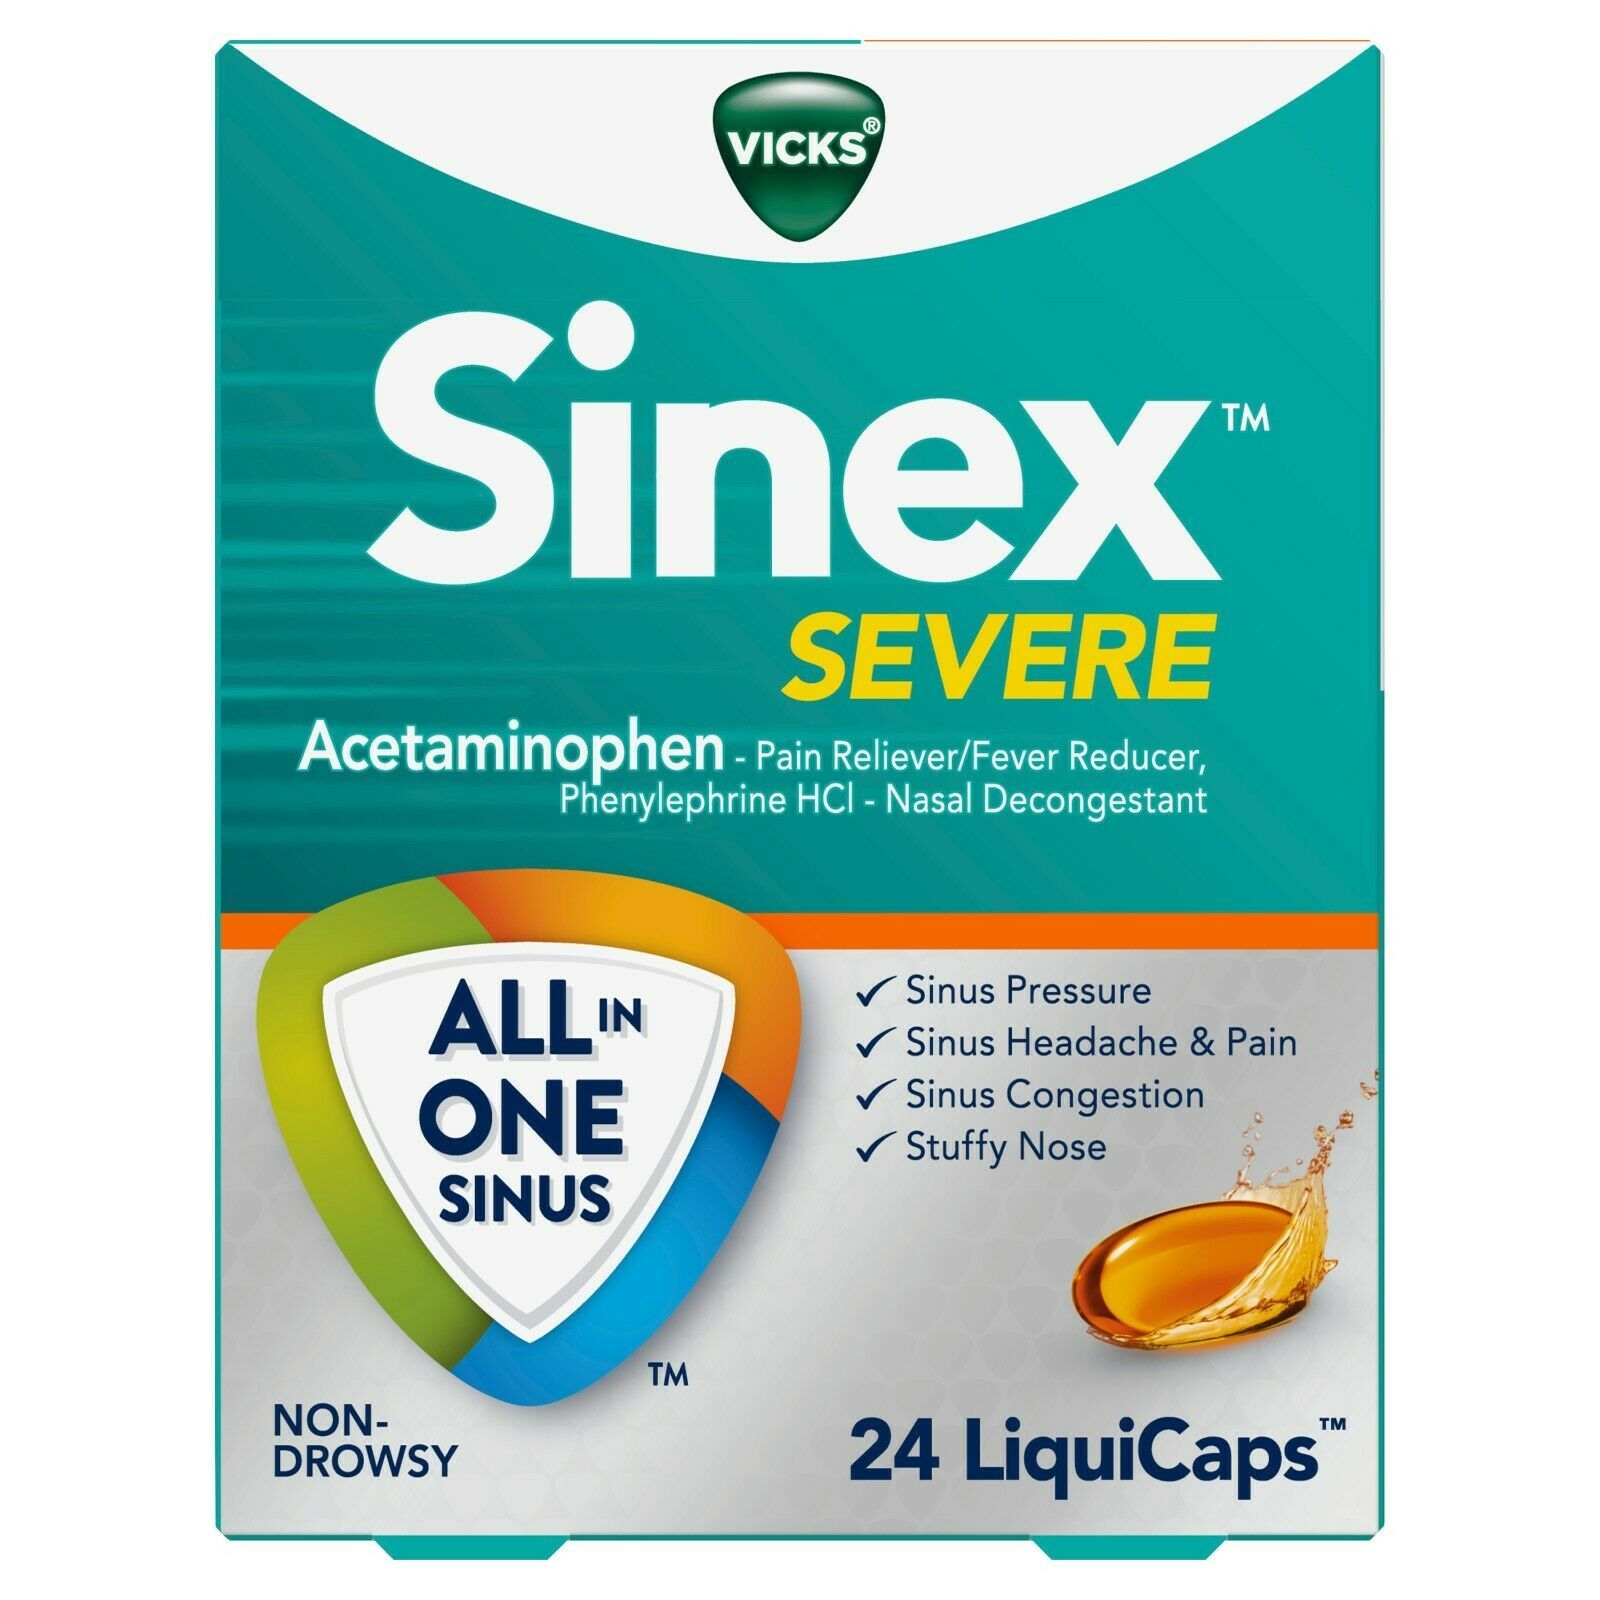 Vicks Sinex SEVERE All-In-One Sinus Pressure, Pain, Congestion, LiquiCaps 24 Ct+ - $19.99